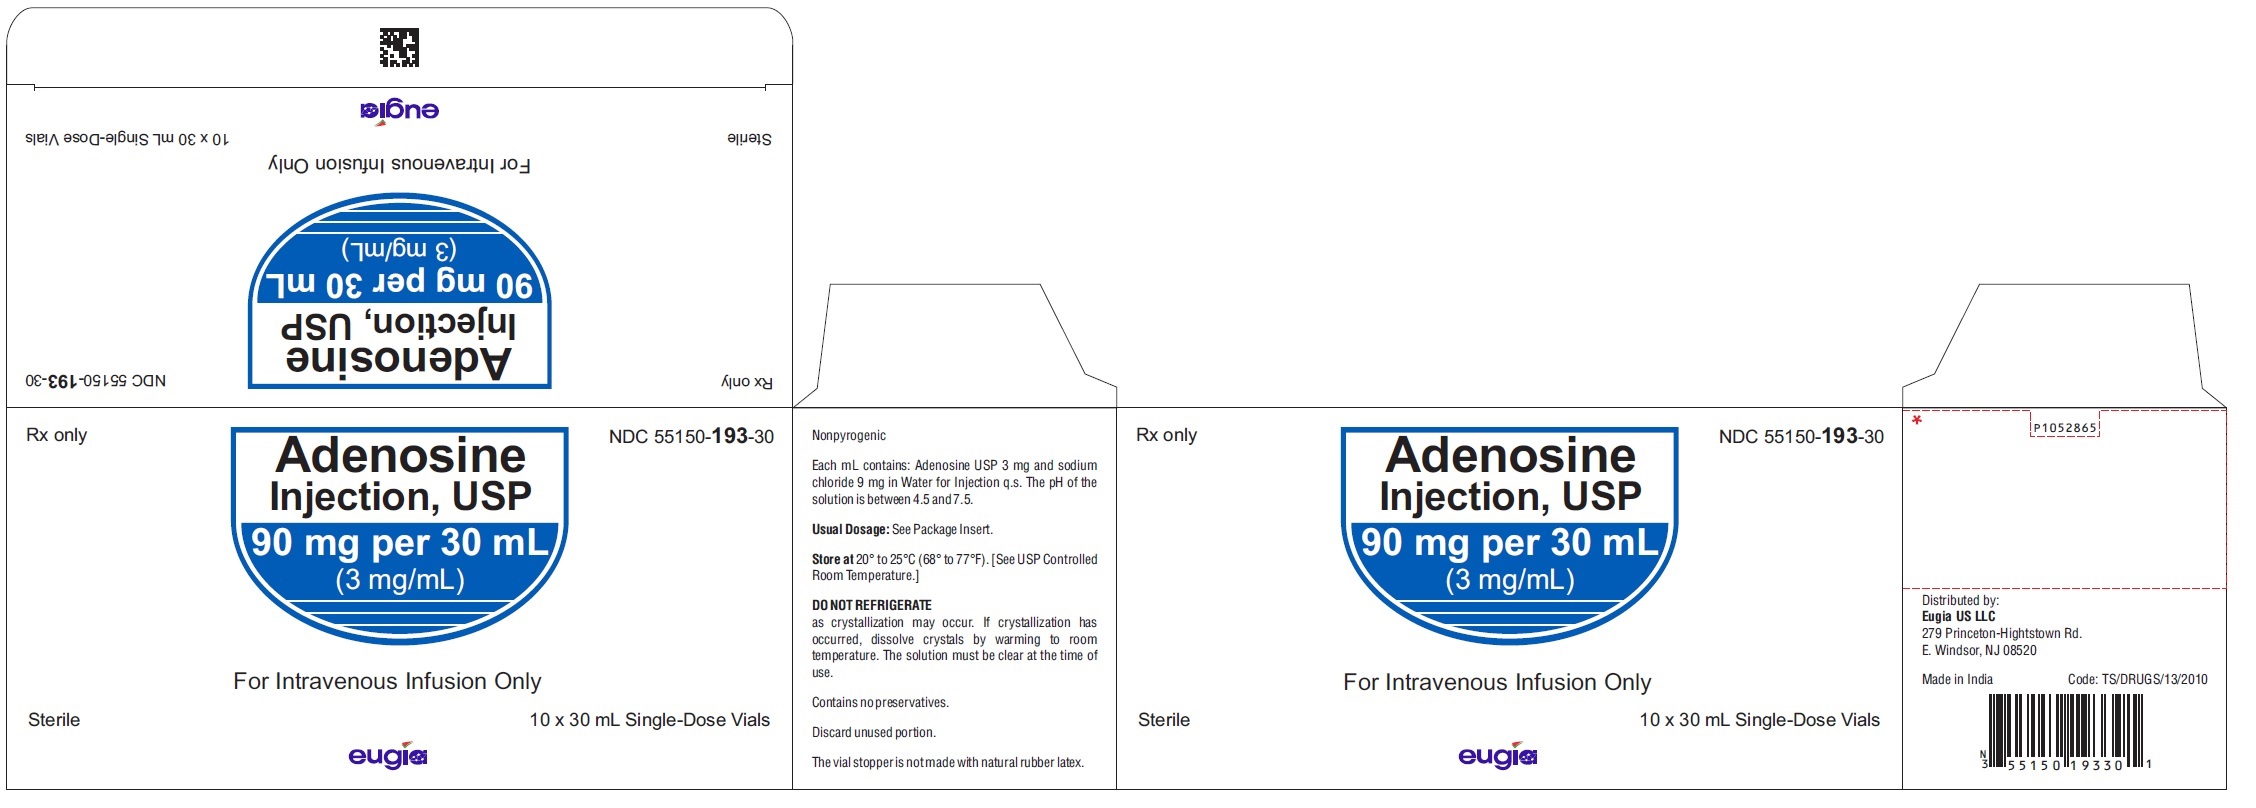 PACKAGE LABEL-PRINCIPAL DISPLAY PANEL - 90 mg per 30 mL (3 mg / mL) - Container-Carton (10 Vial)